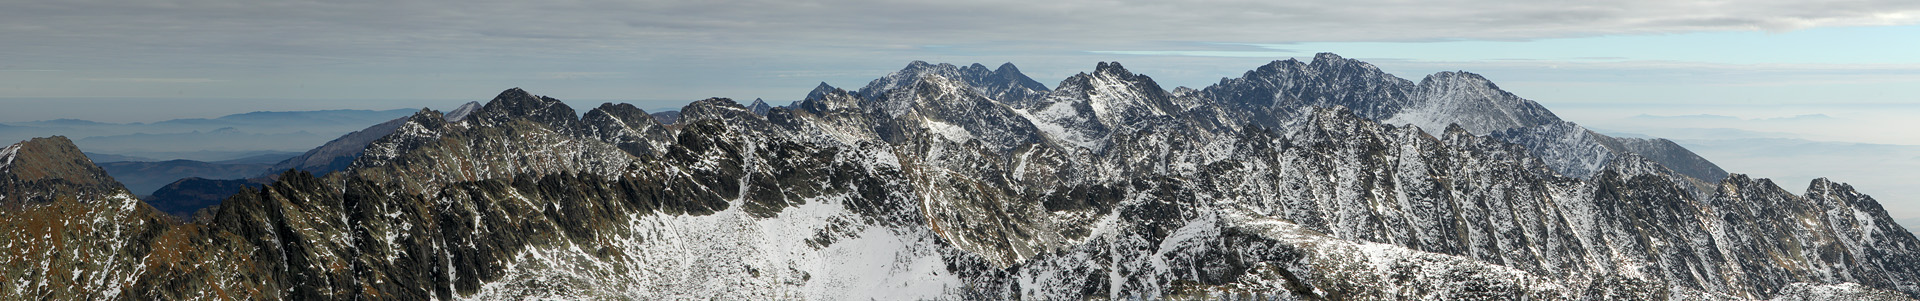 High Tatras - panorama from Krivan, Slovakia